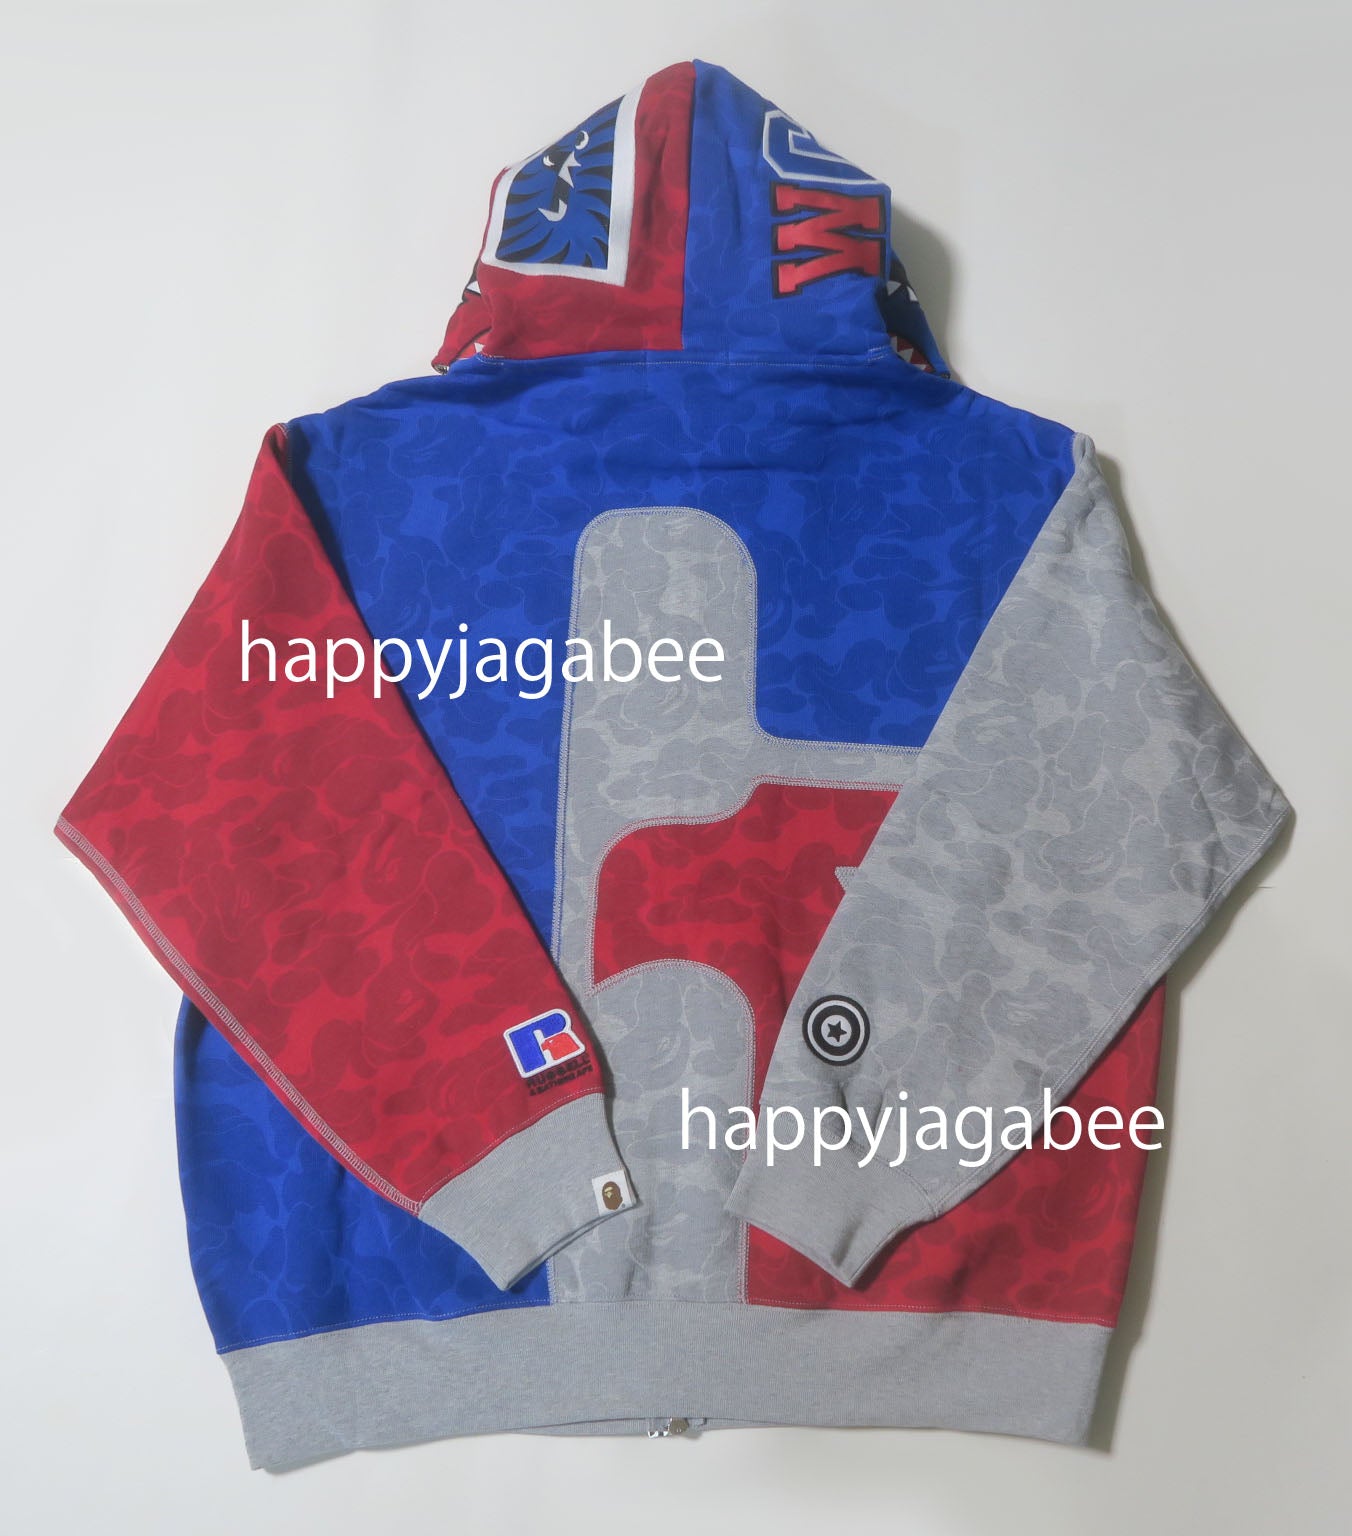 BAPE American Shark full zip hoodie Red A Bathing Ape Size S